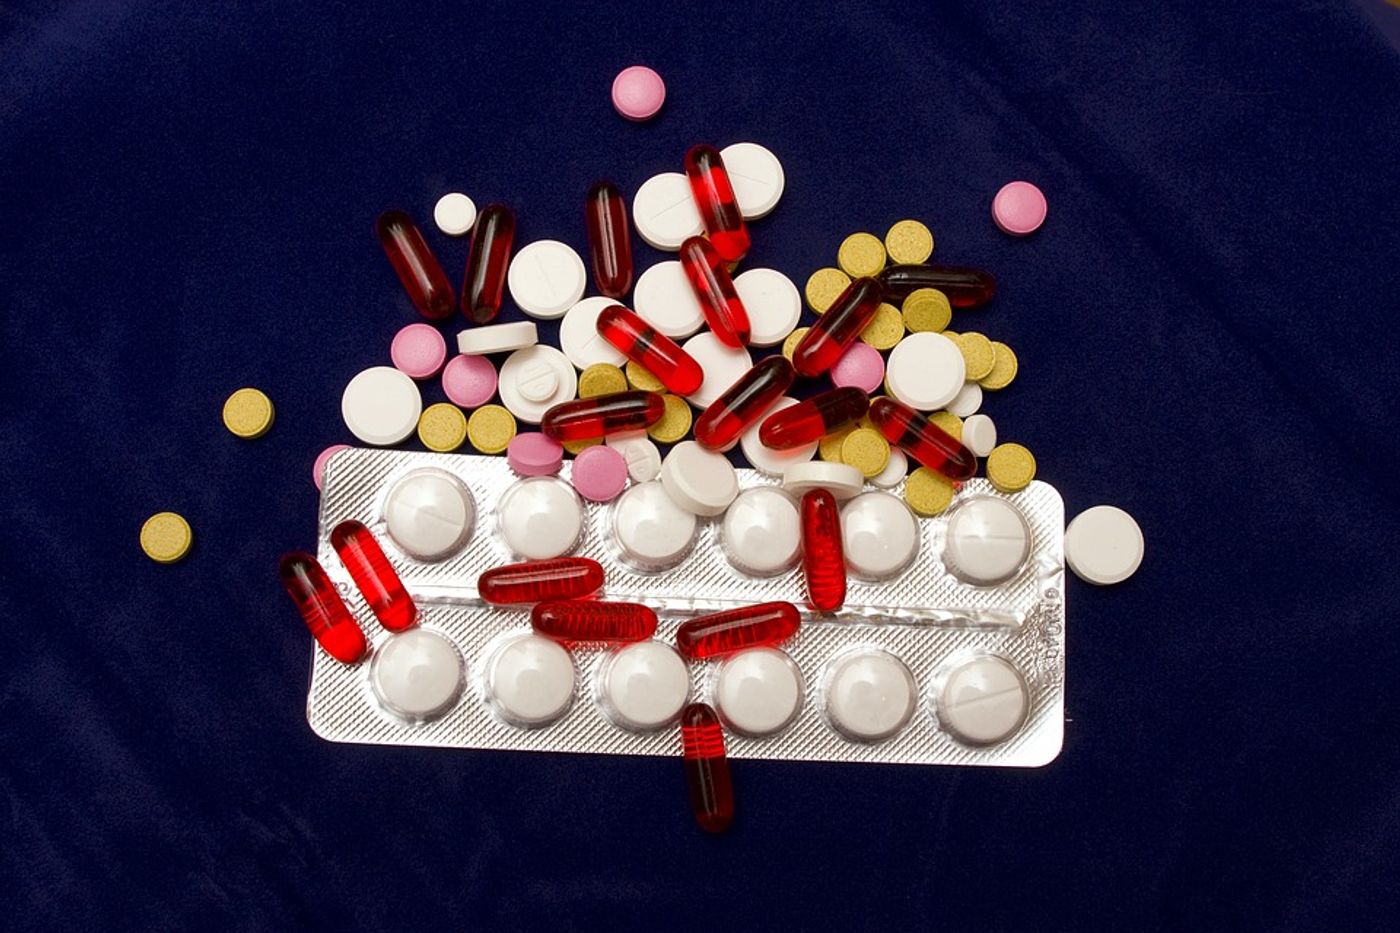 Southern Europeans use more antibiotics than northern Europeans. Photo: Pixabay